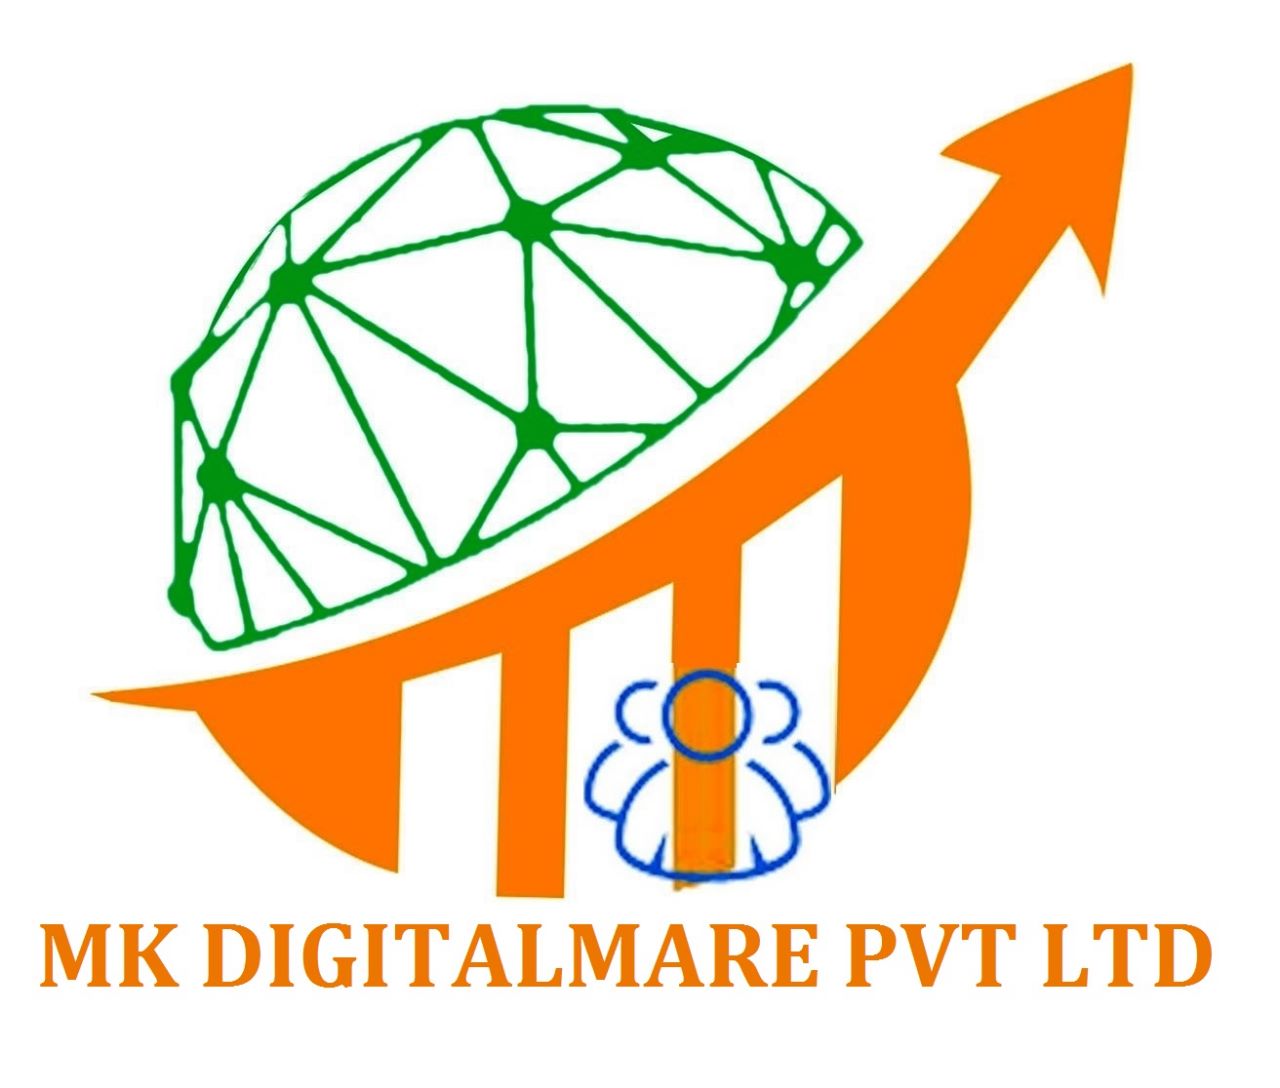 Best Digital Marketing Company In Hyderabad. MK DIGITALMARE PVT LTD.